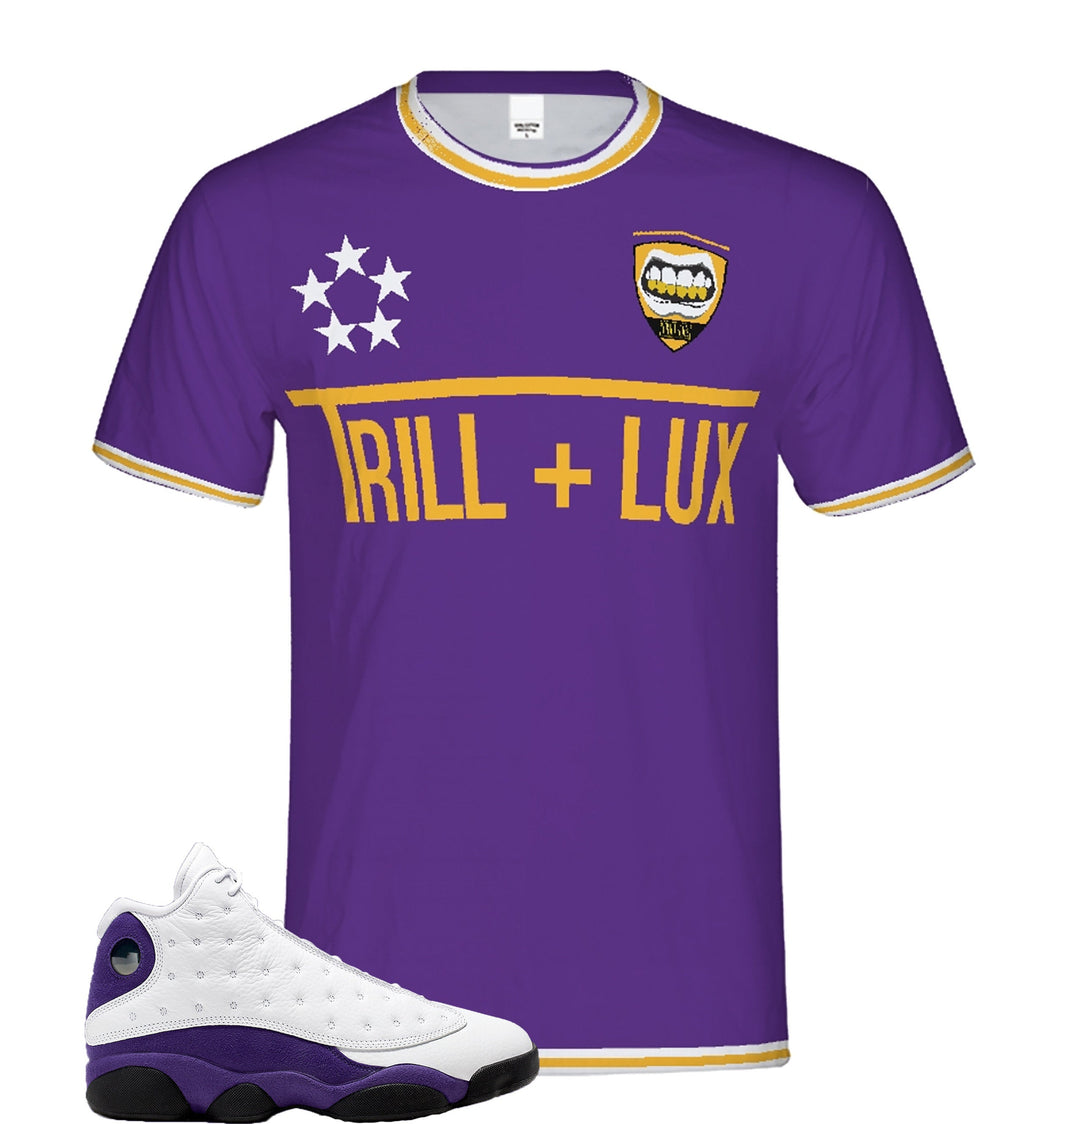 Trill Court Purple | Retro Jordan 13 T-shirt | Tee | Shirt | Designed to Match Air Jordan 13 Sneakers XIII